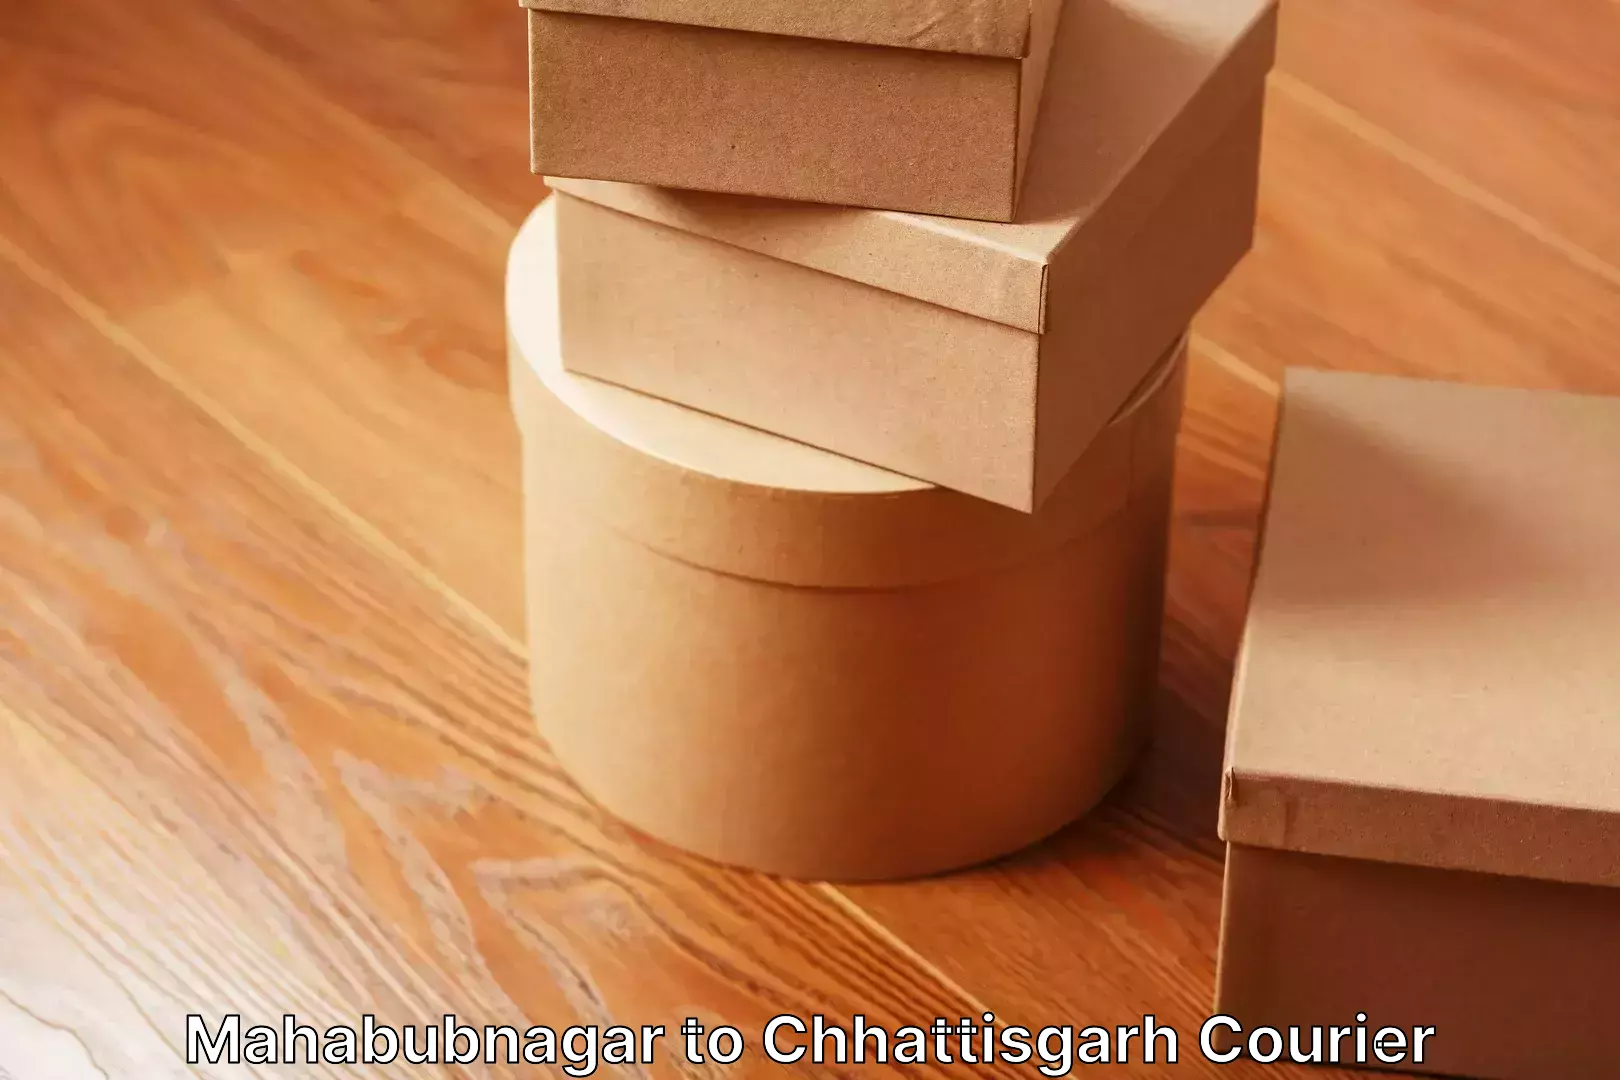 Moving and packing experts Mahabubnagar to Chhattisgarh